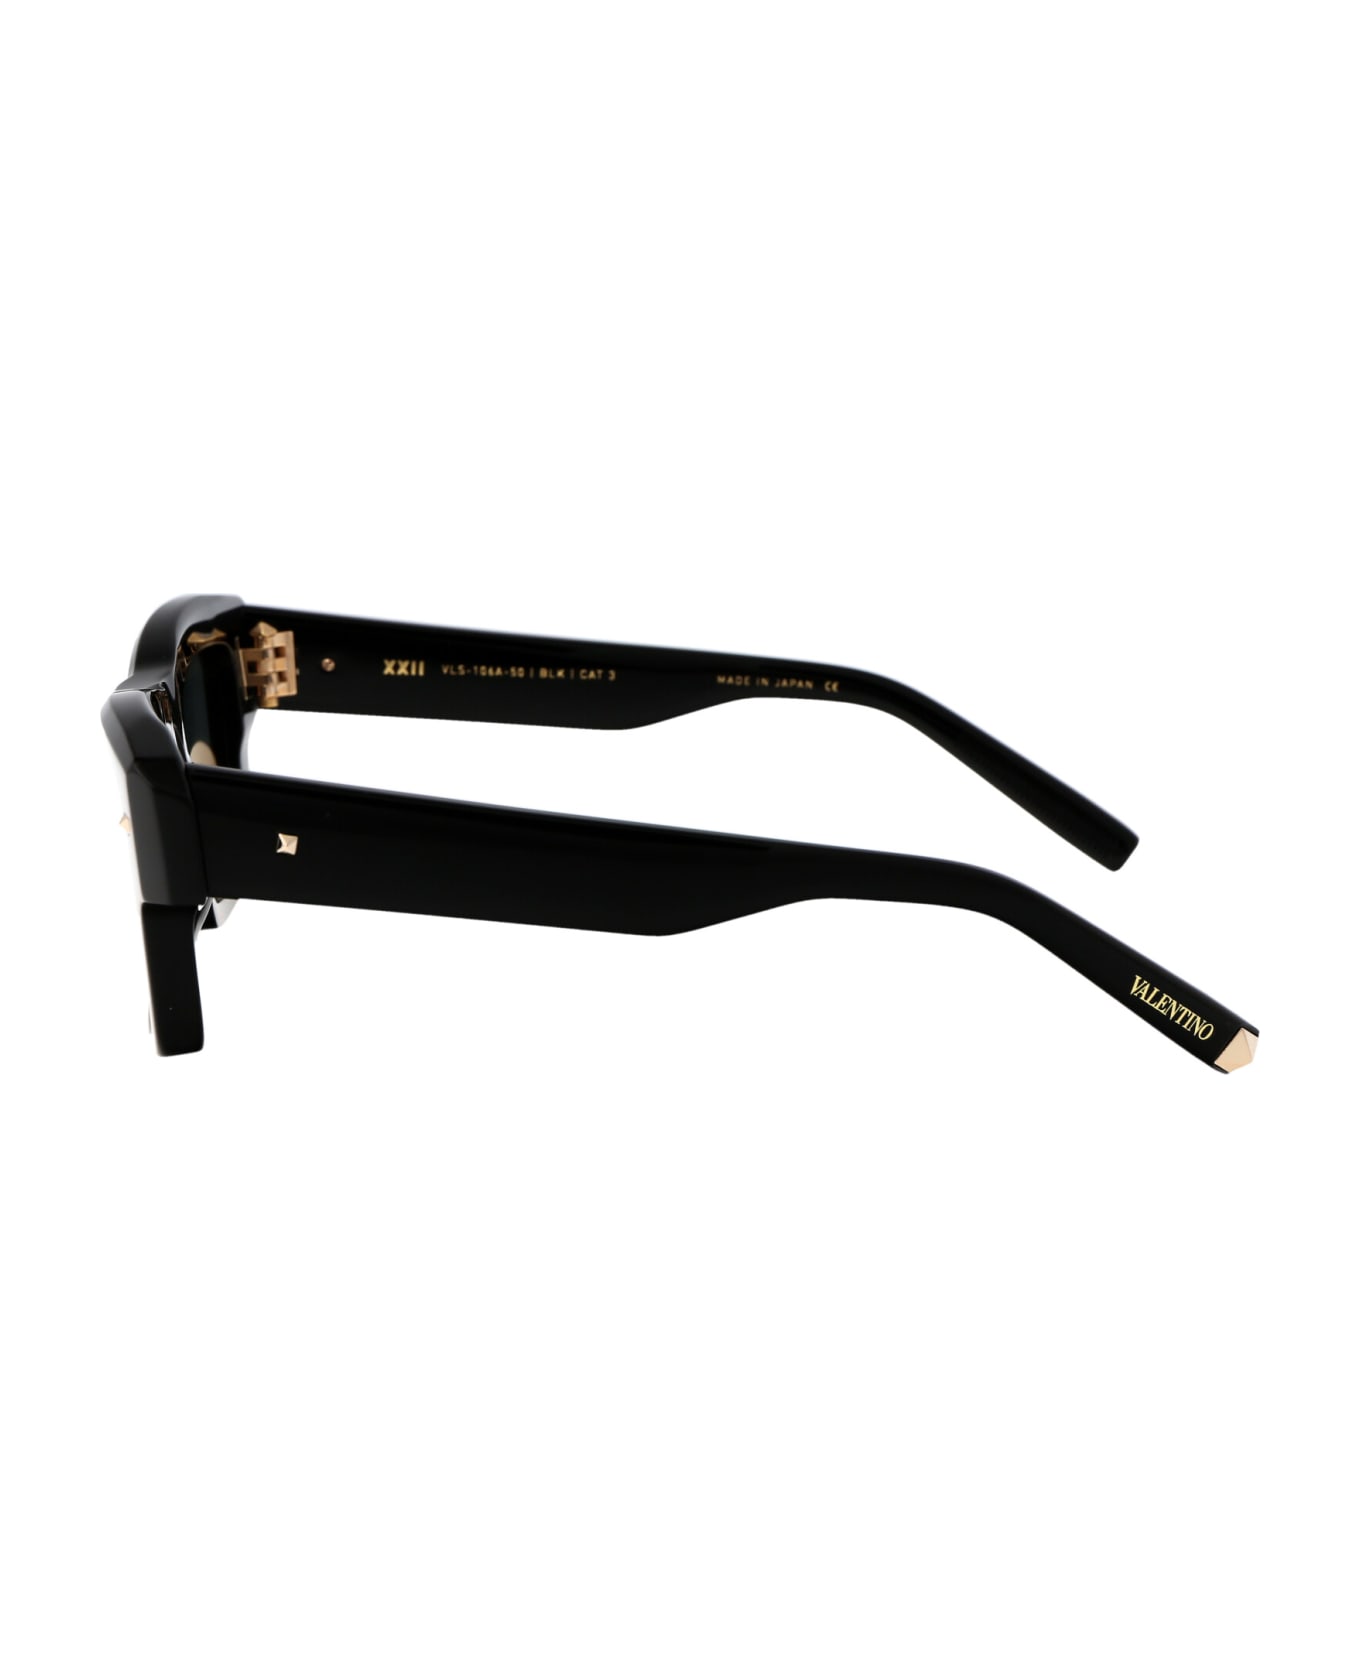 Valentino Eyewear Xxii Sunglasses - Black - White Gold w/Dark Green Lenses